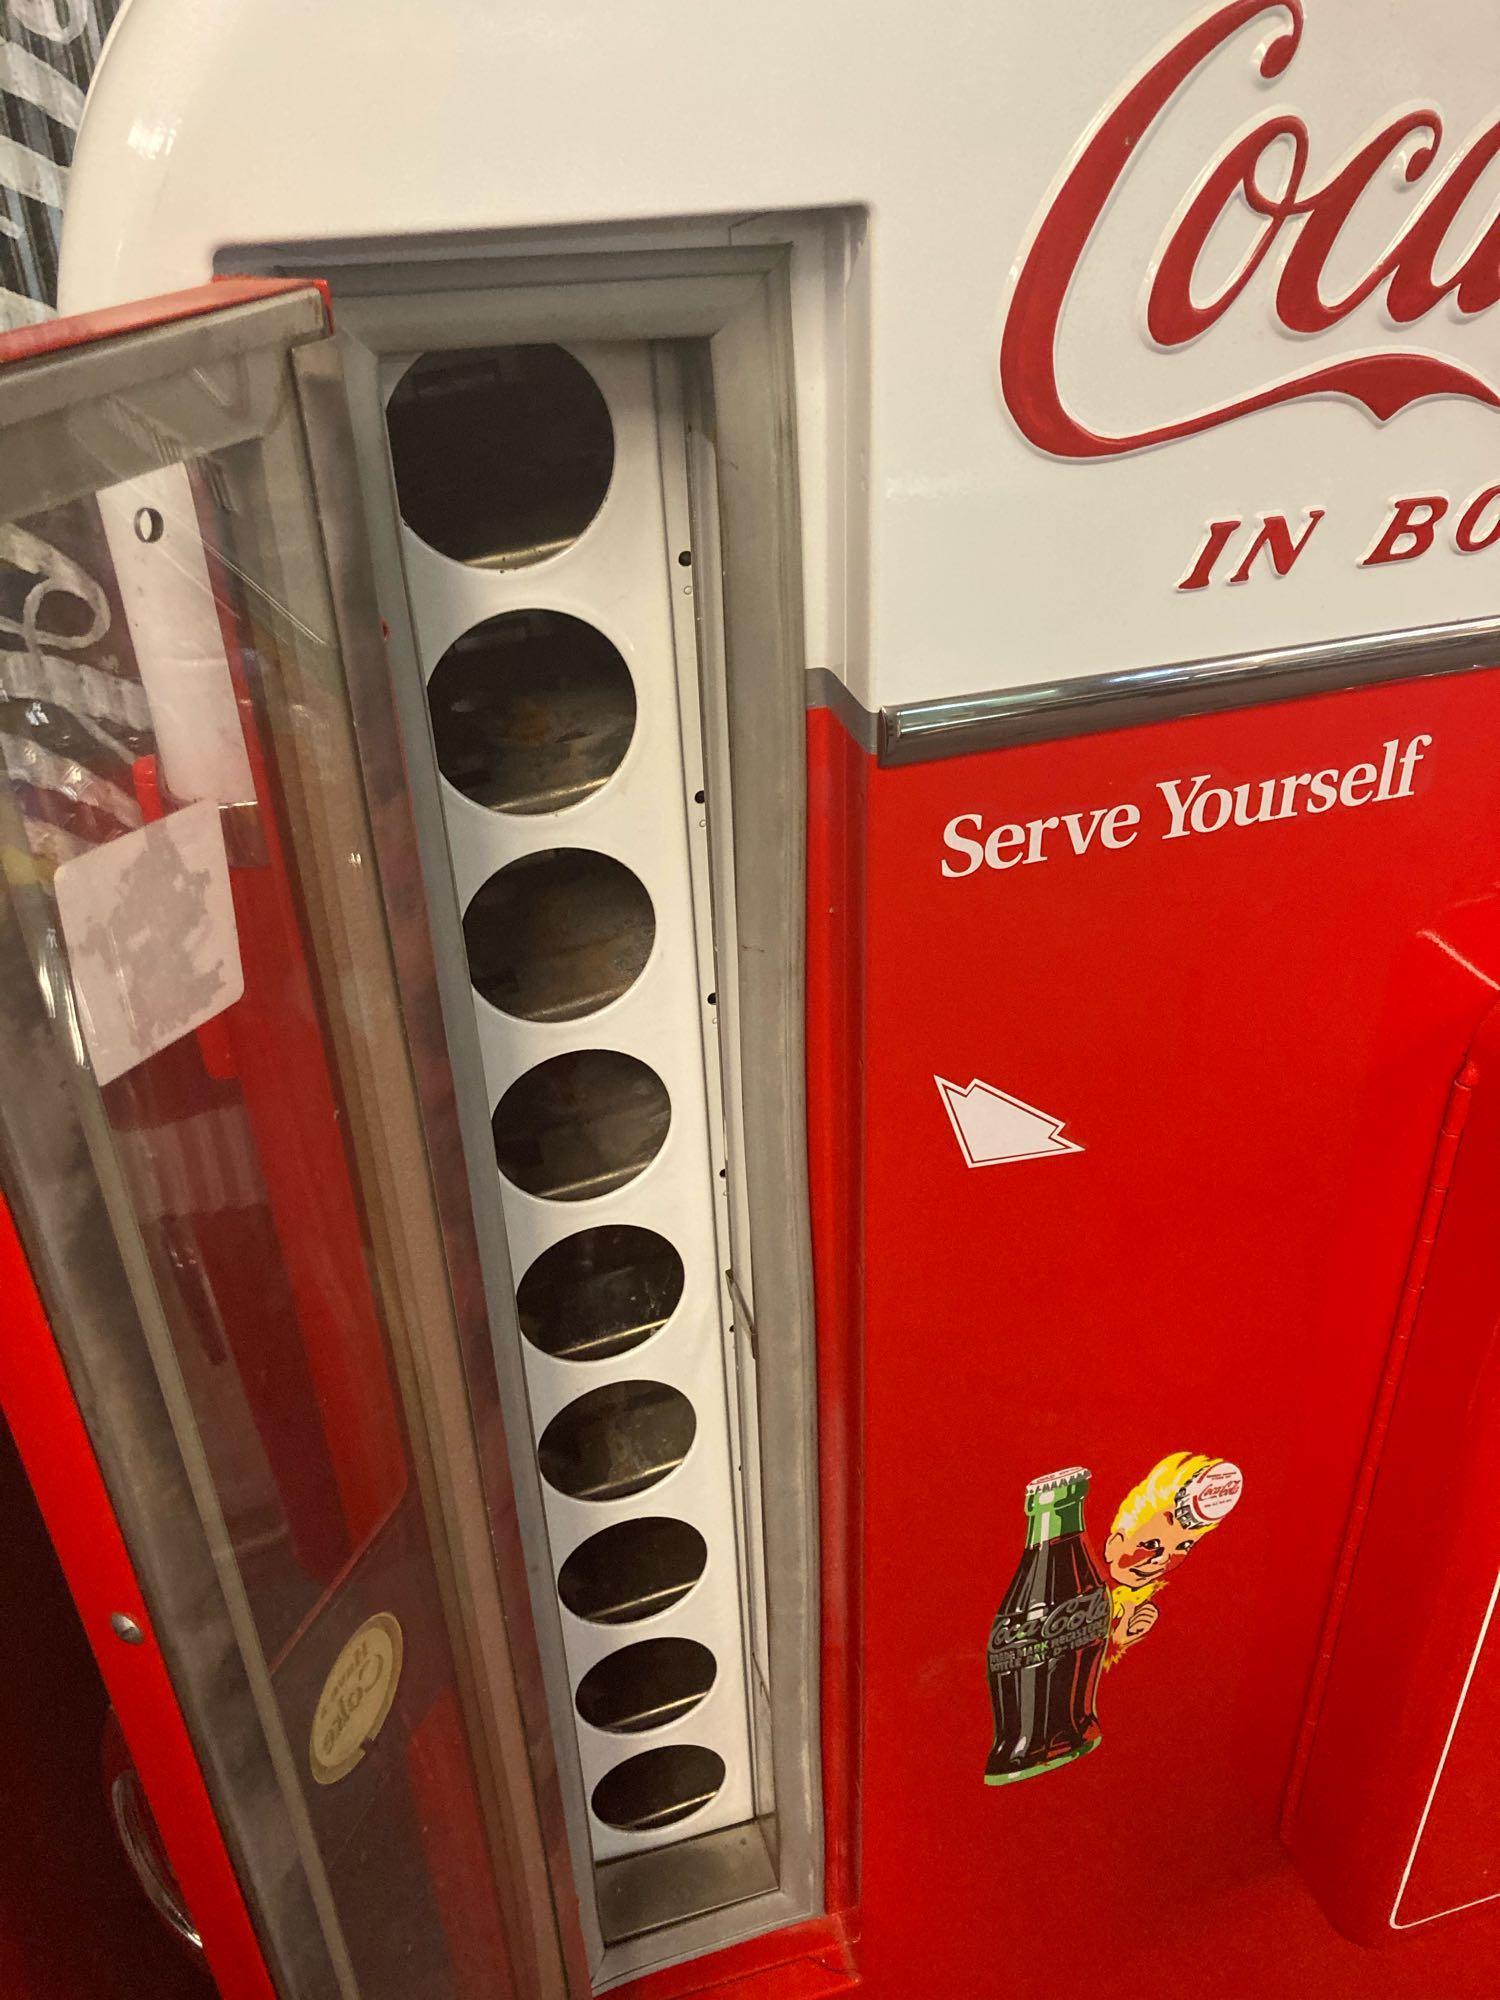 Vendo Coca-Cola 10-Cent vending Machine, rounded corners